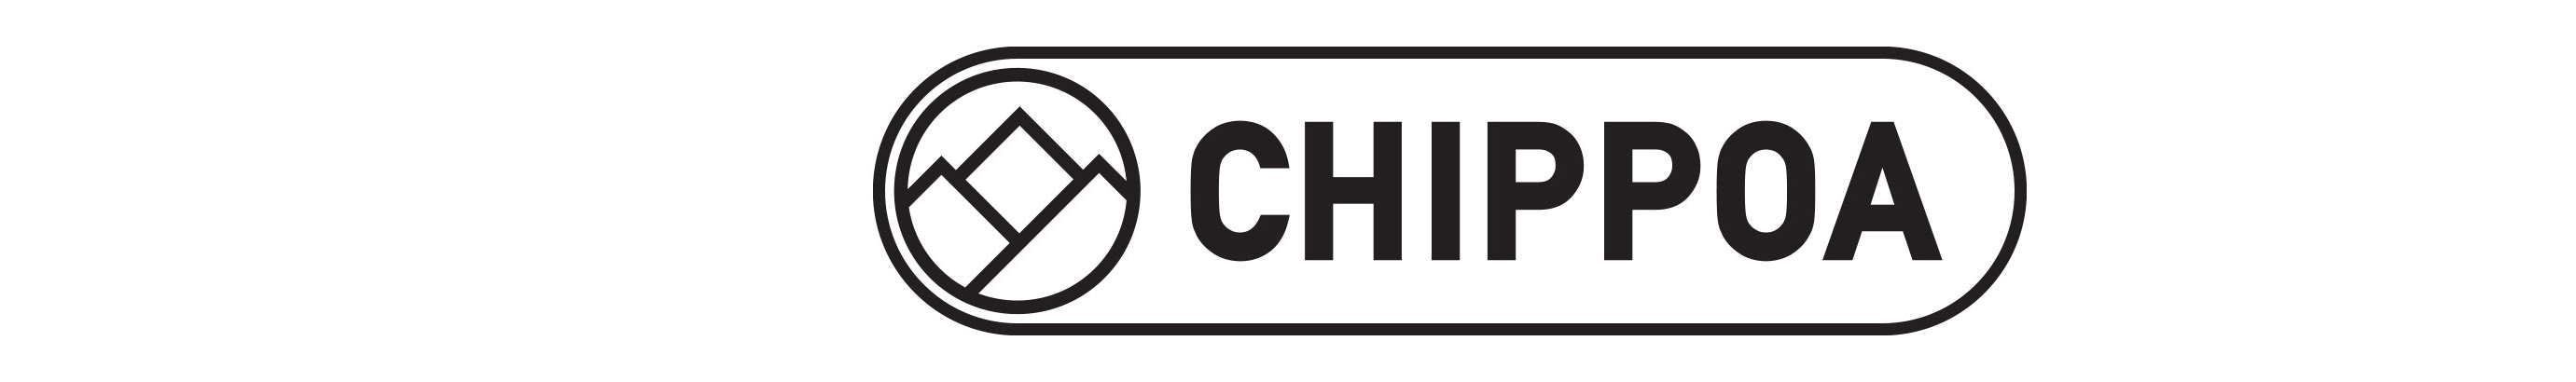 Chippoa Chip's profile banner